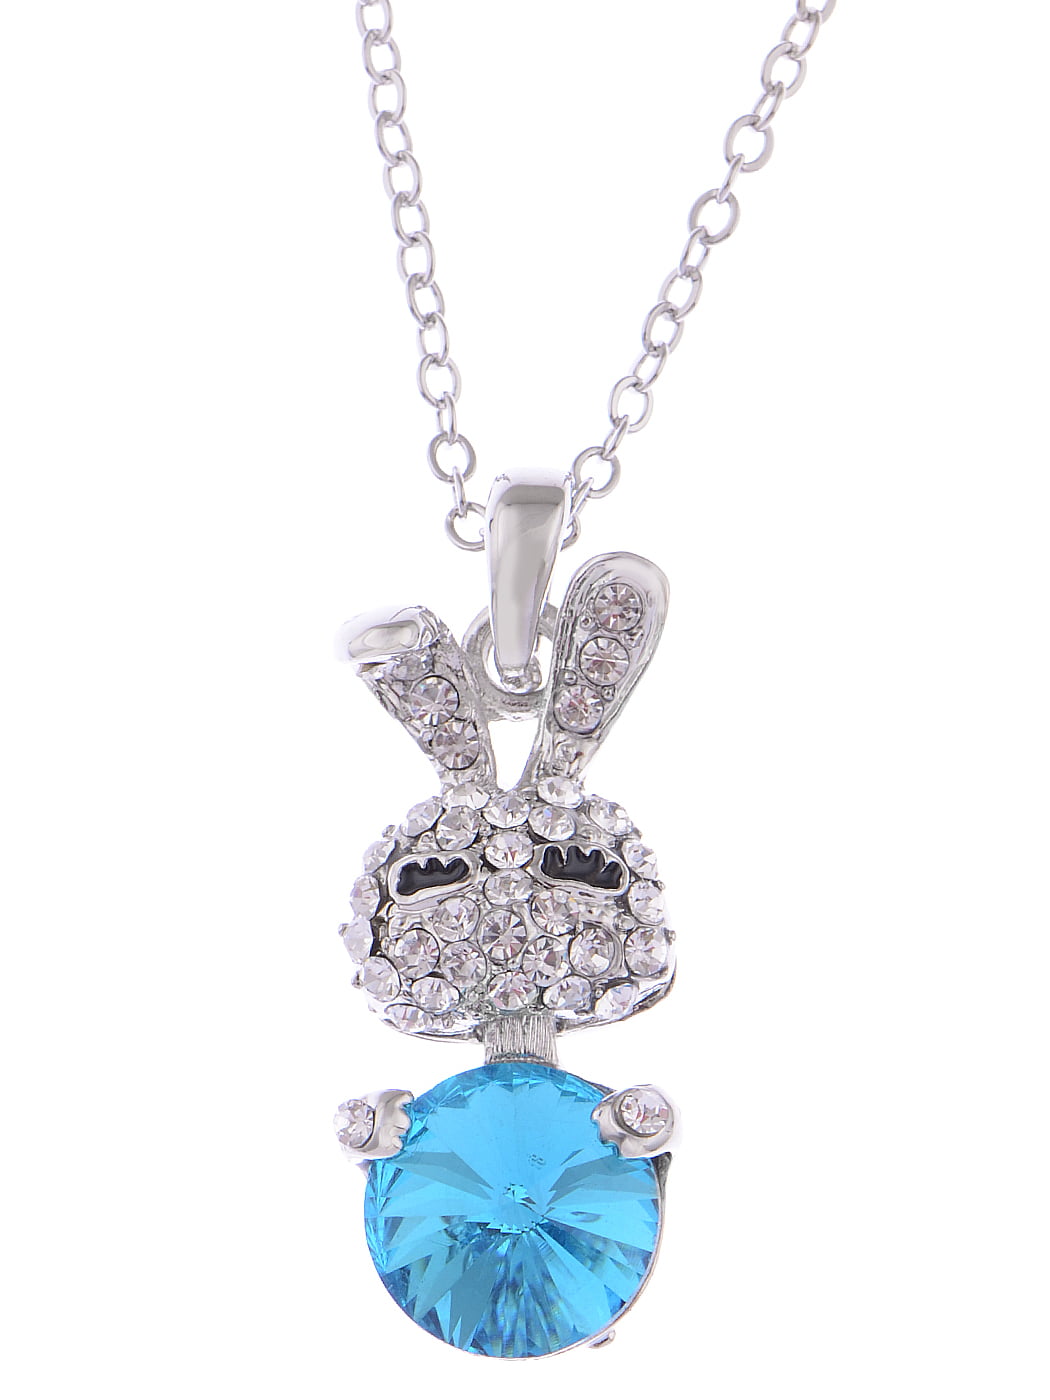 Crystal Rhinestone Enamel White Ear Bunny Rabbit Small Pendant Necklace Jewelry 